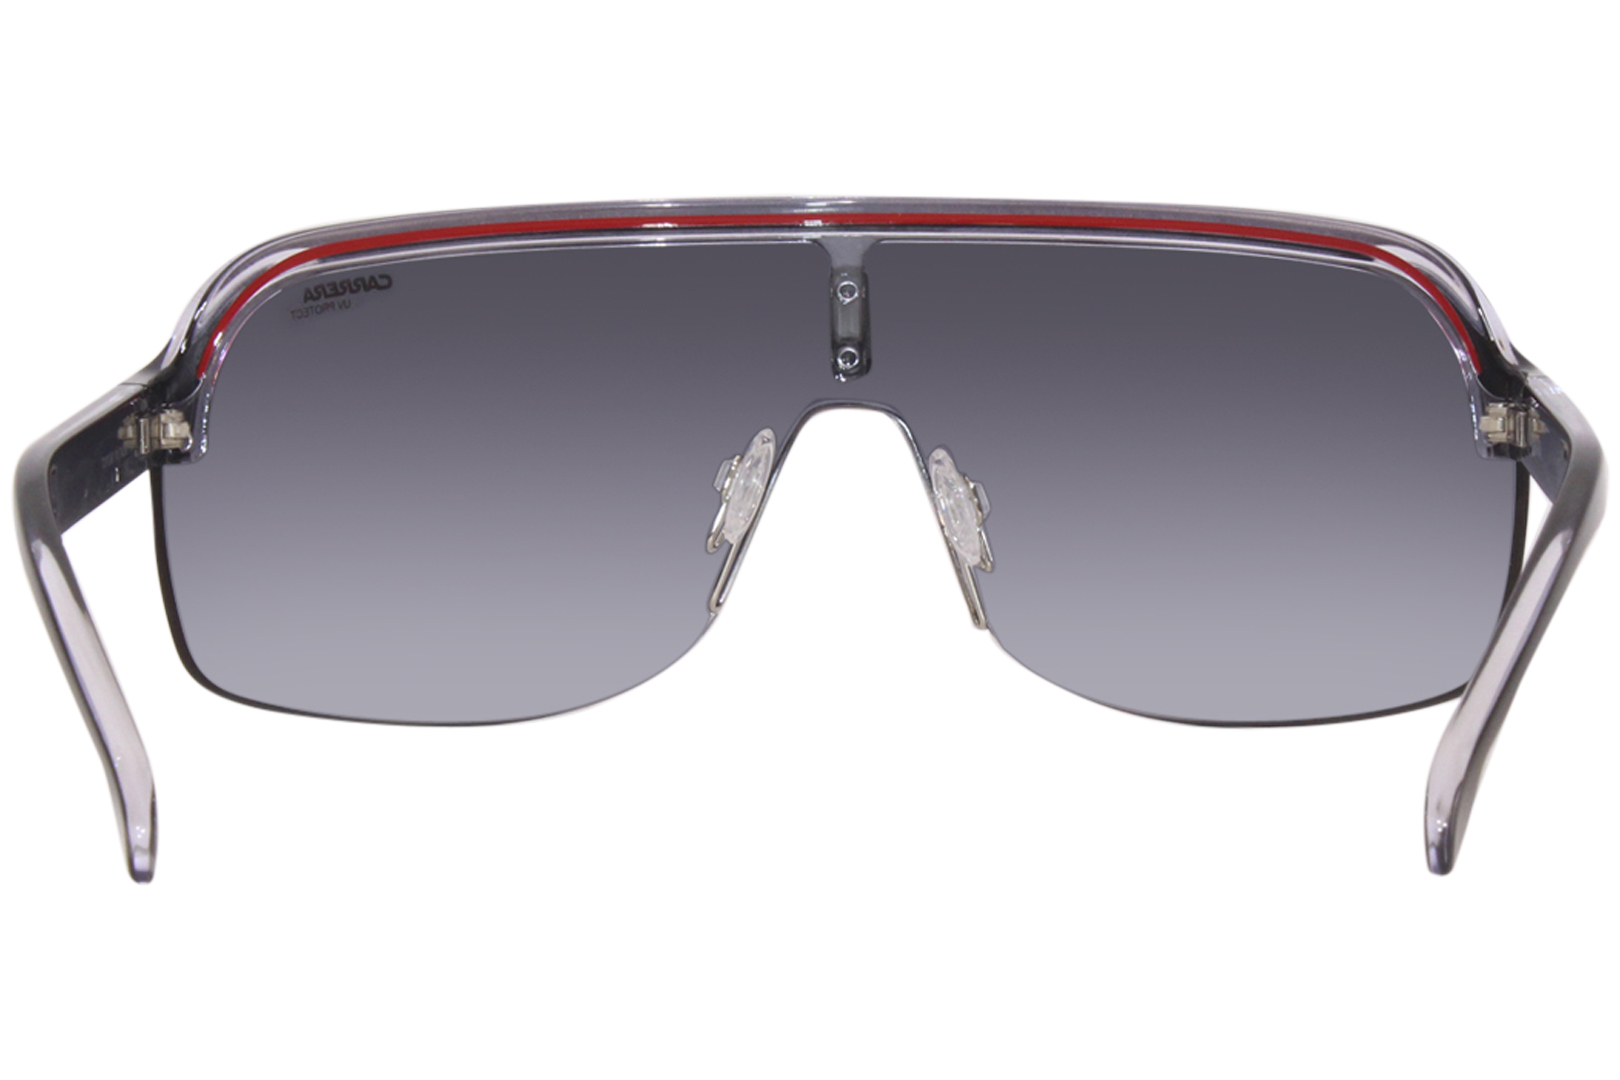 Carrera TOPCAR/1/N T4O/9O Sunglasses Men's Black/Grey Gradient Shield  99-01-115 